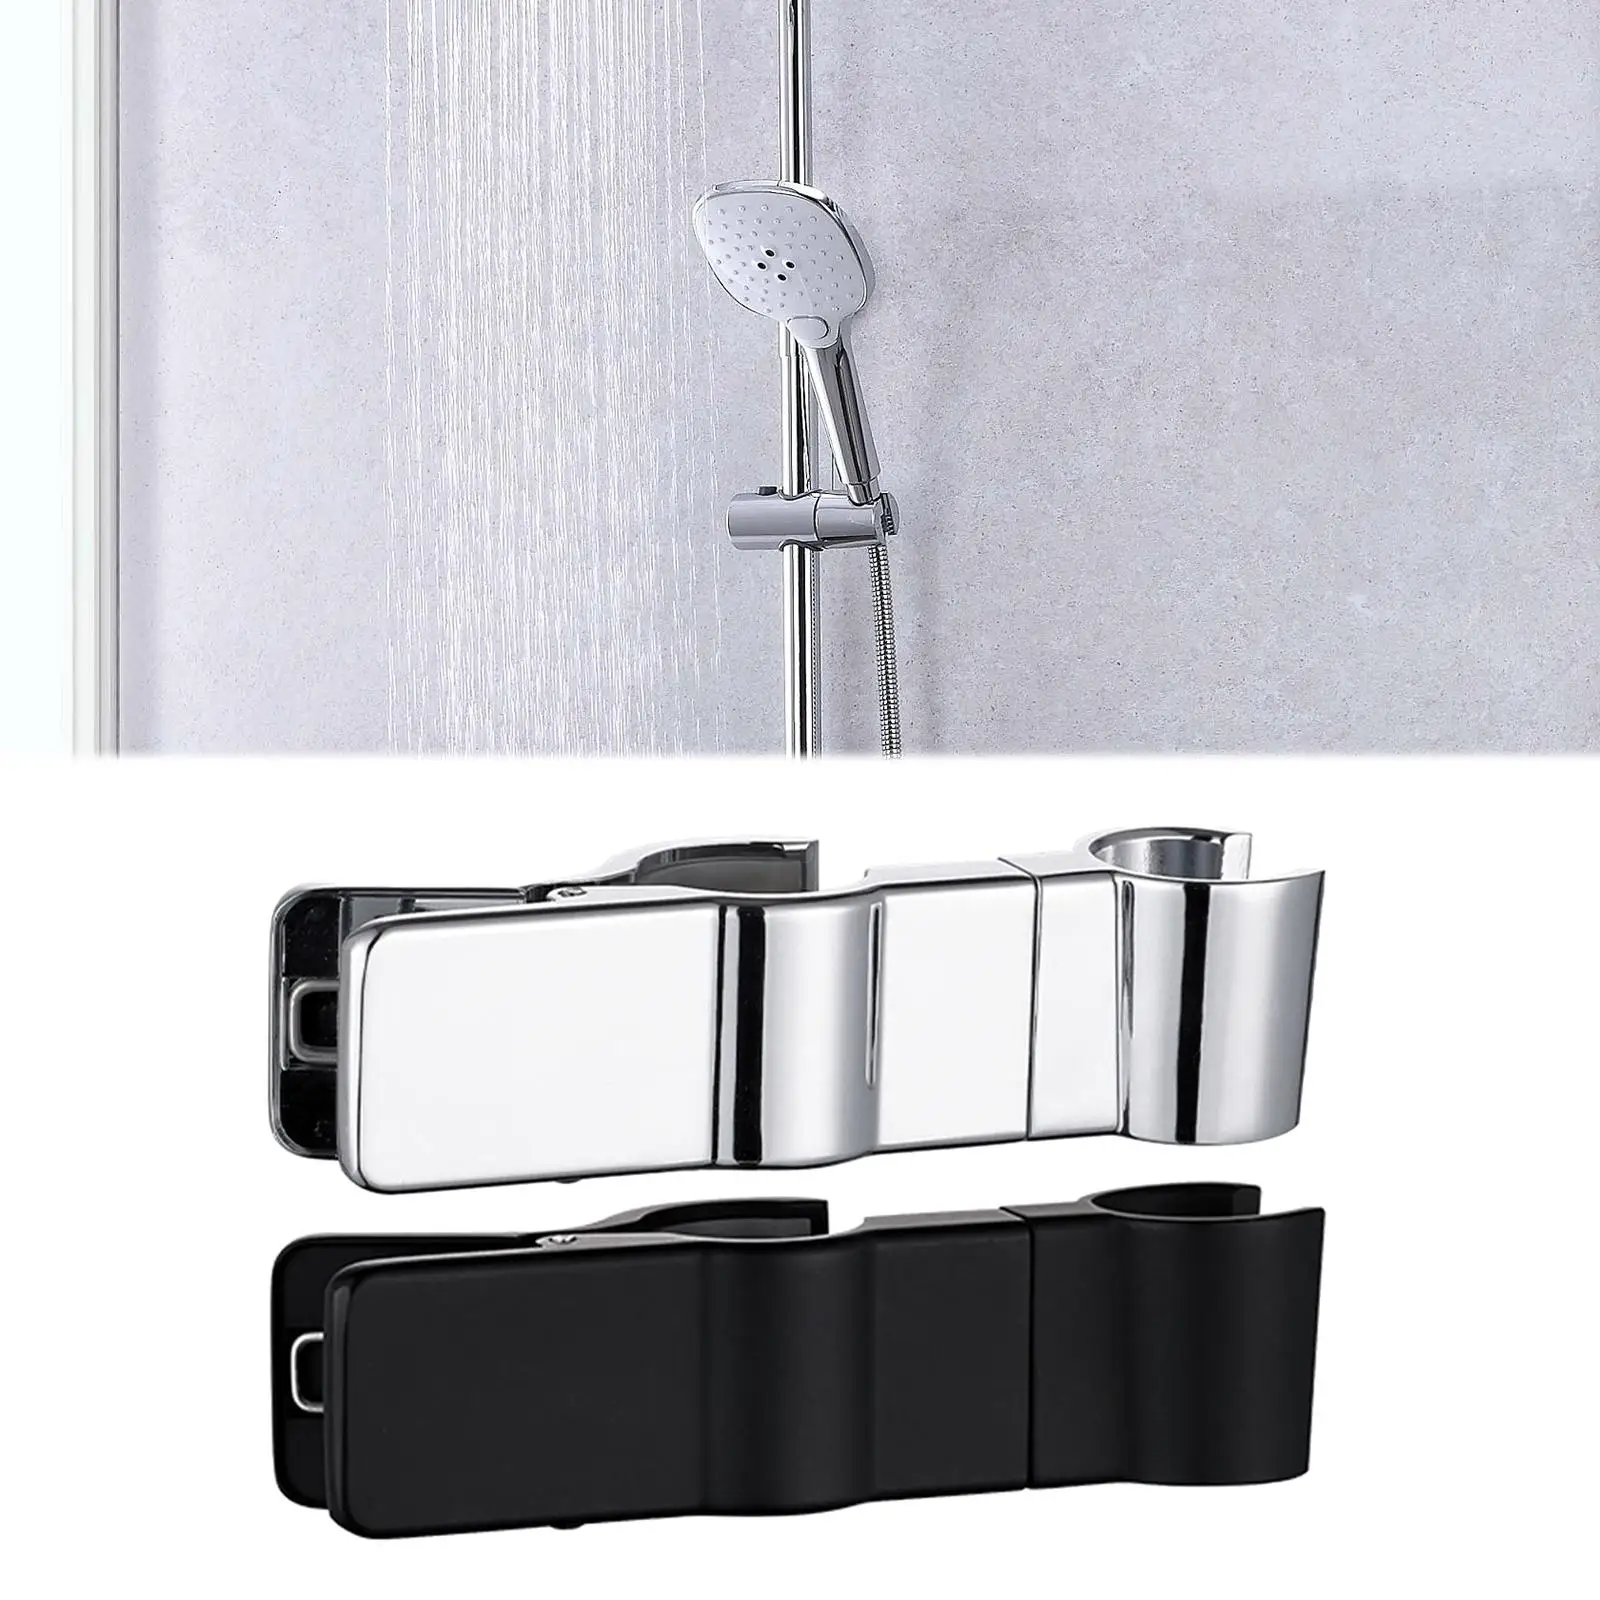 Slide shower holder Bathroom Replacement Handheld Shower Holder for Bathhouse Fitting